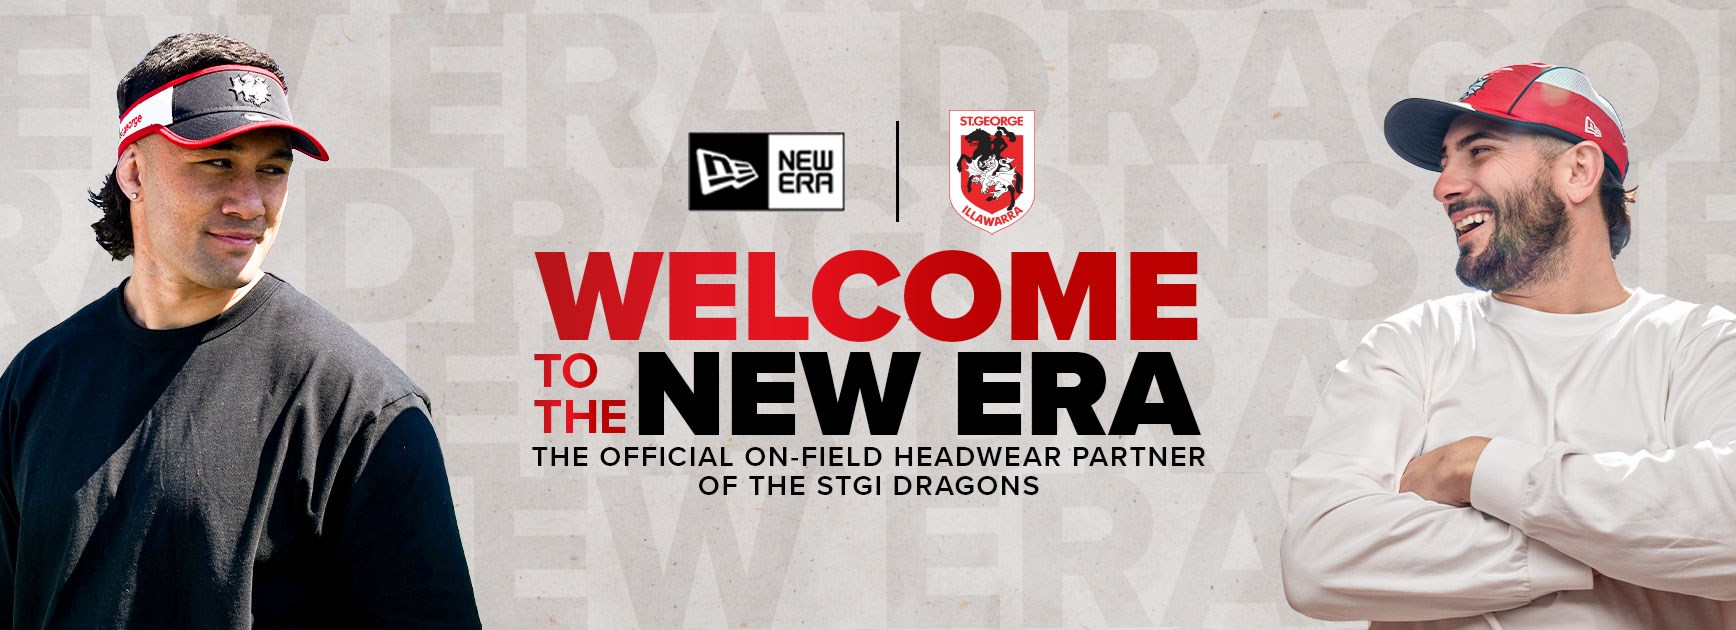 Dragons welcome New Era partnership